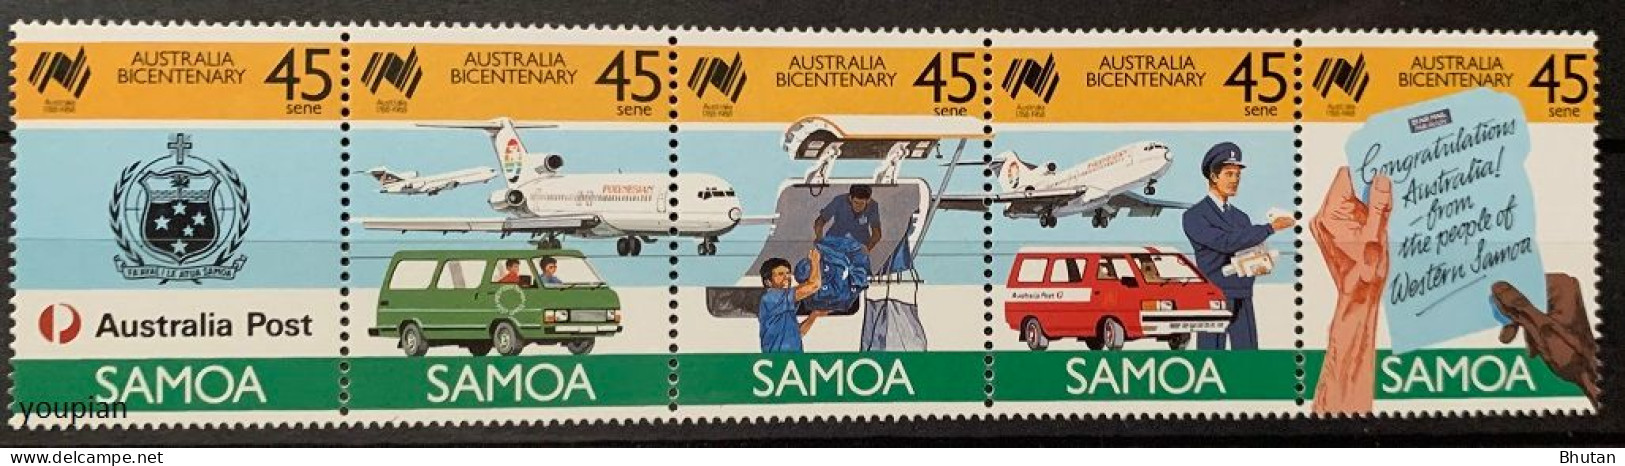 Samoa 1988, Australia Bicentenary, MNH Stamps Strip - Samoa